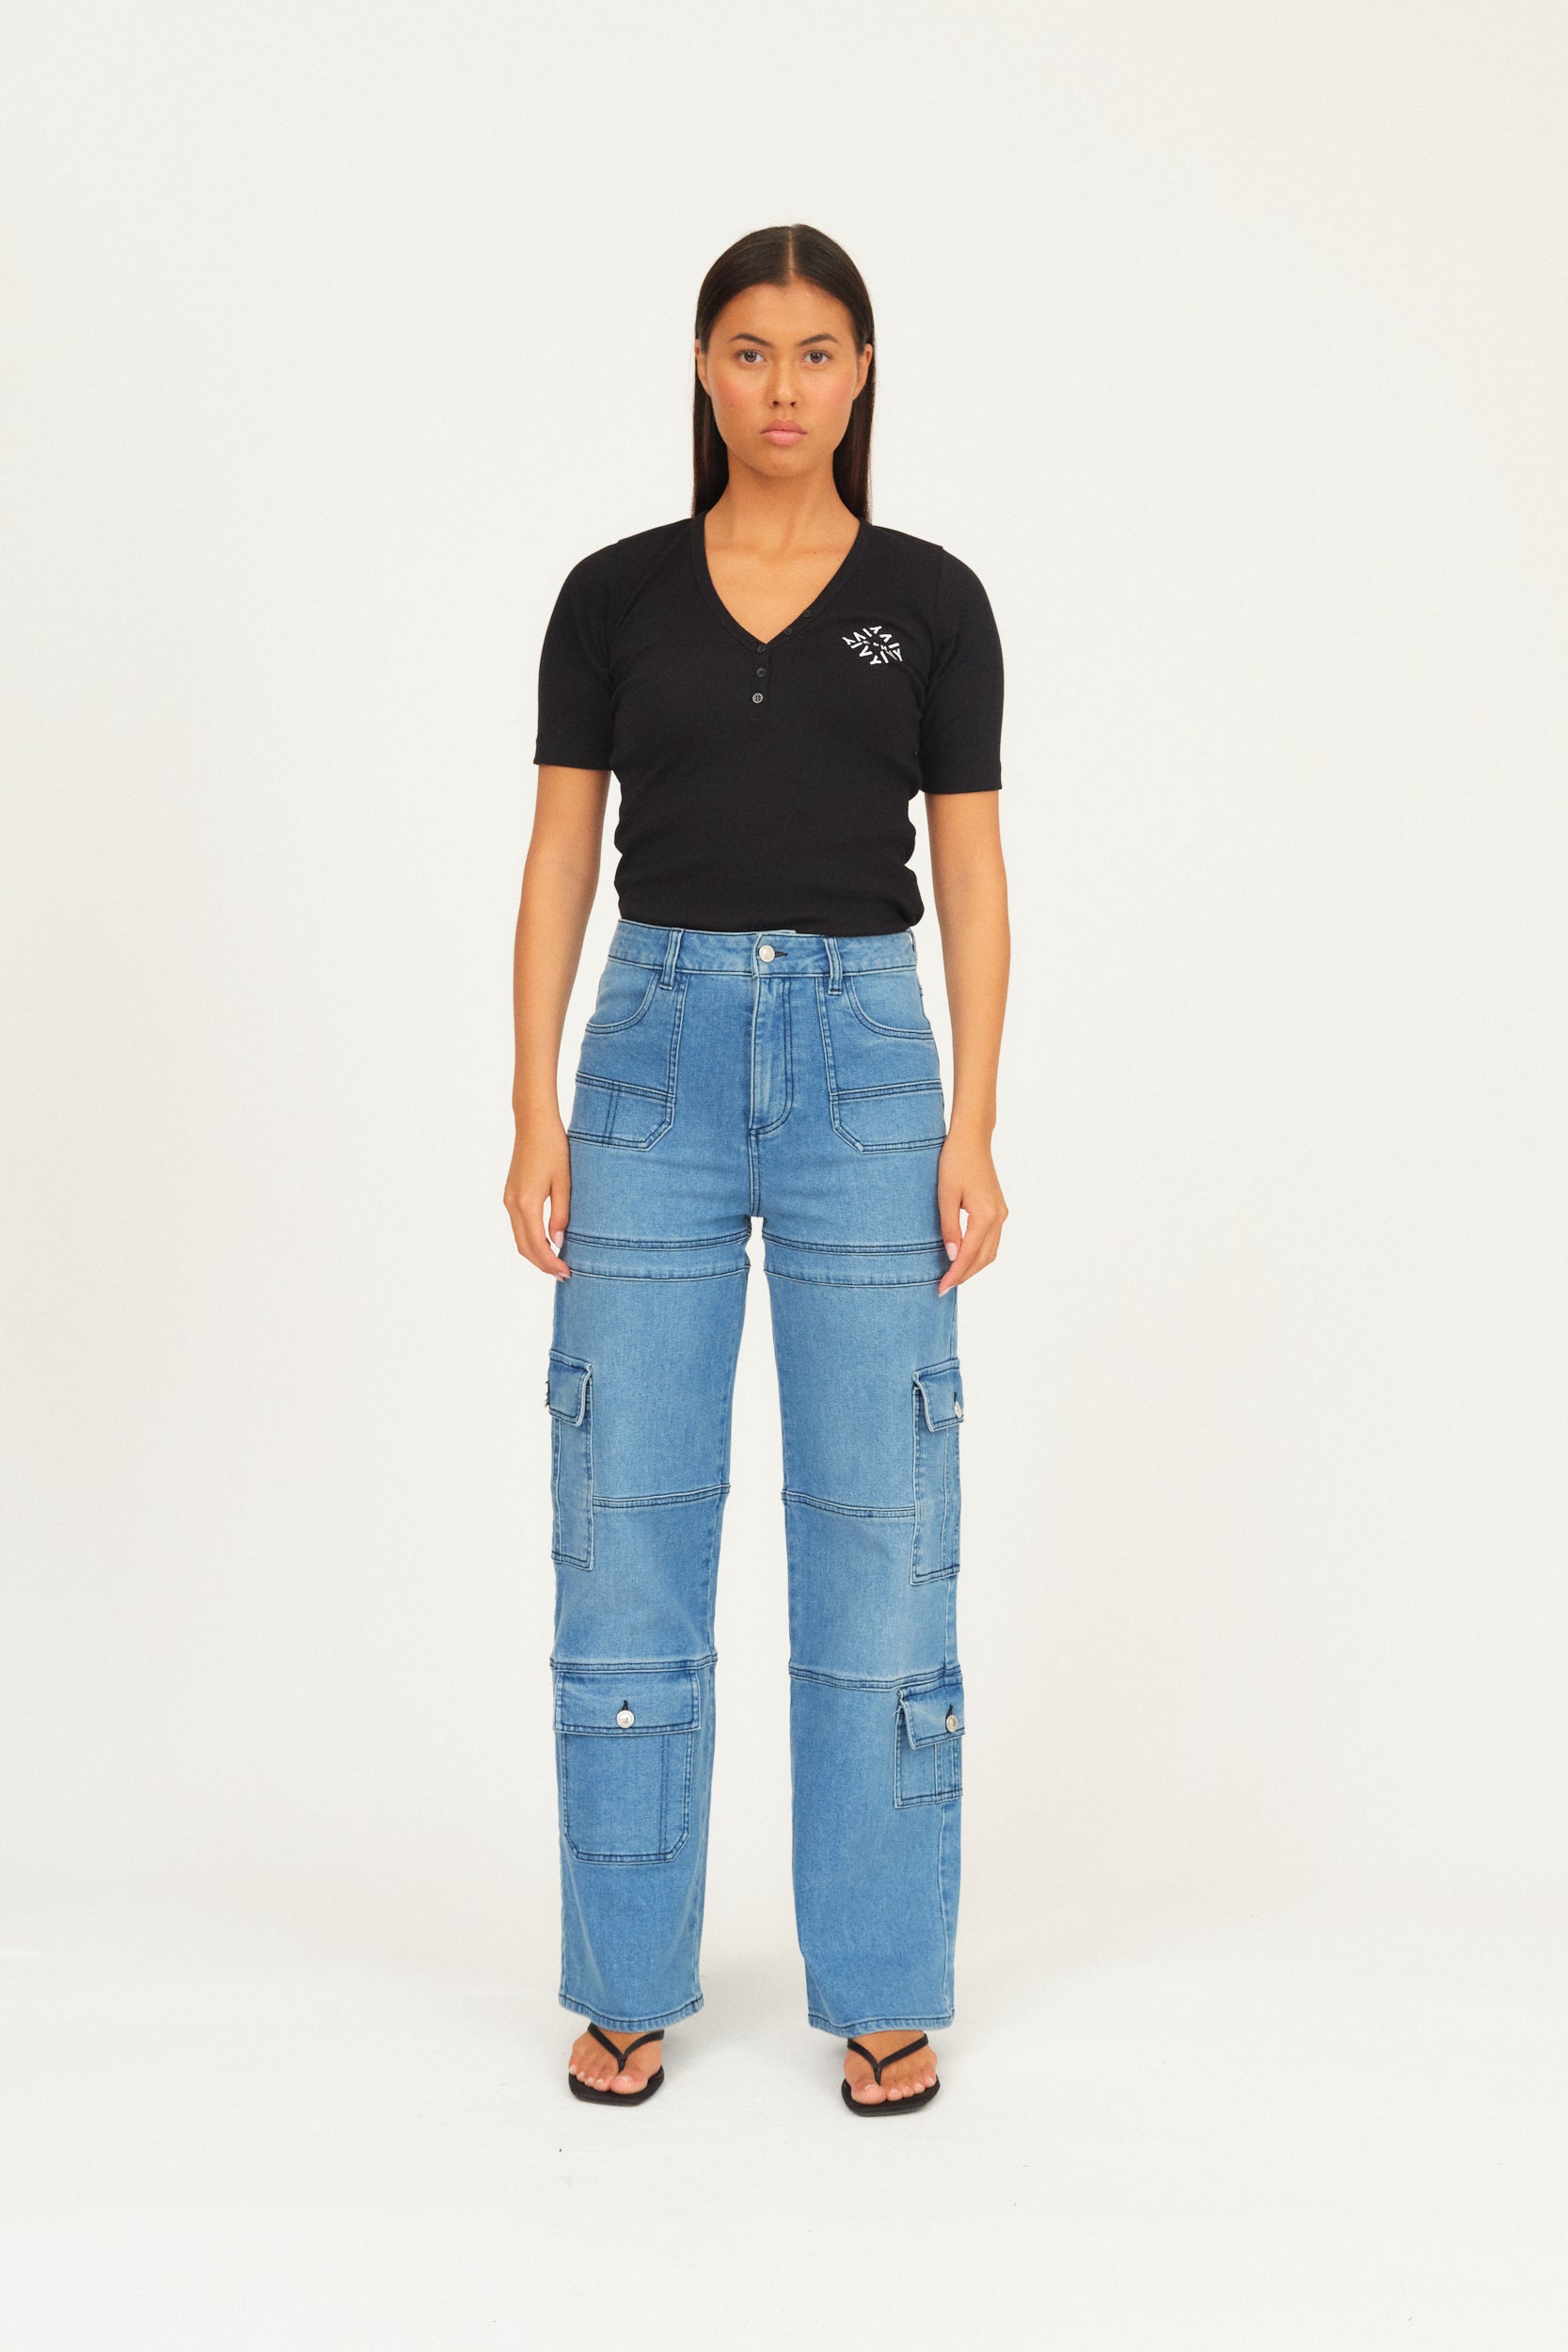 IVY Copenhagen IVY-Brooke Multi Pocket Jeans Wash Dayton Jeans & Pants 51 Denim Blue